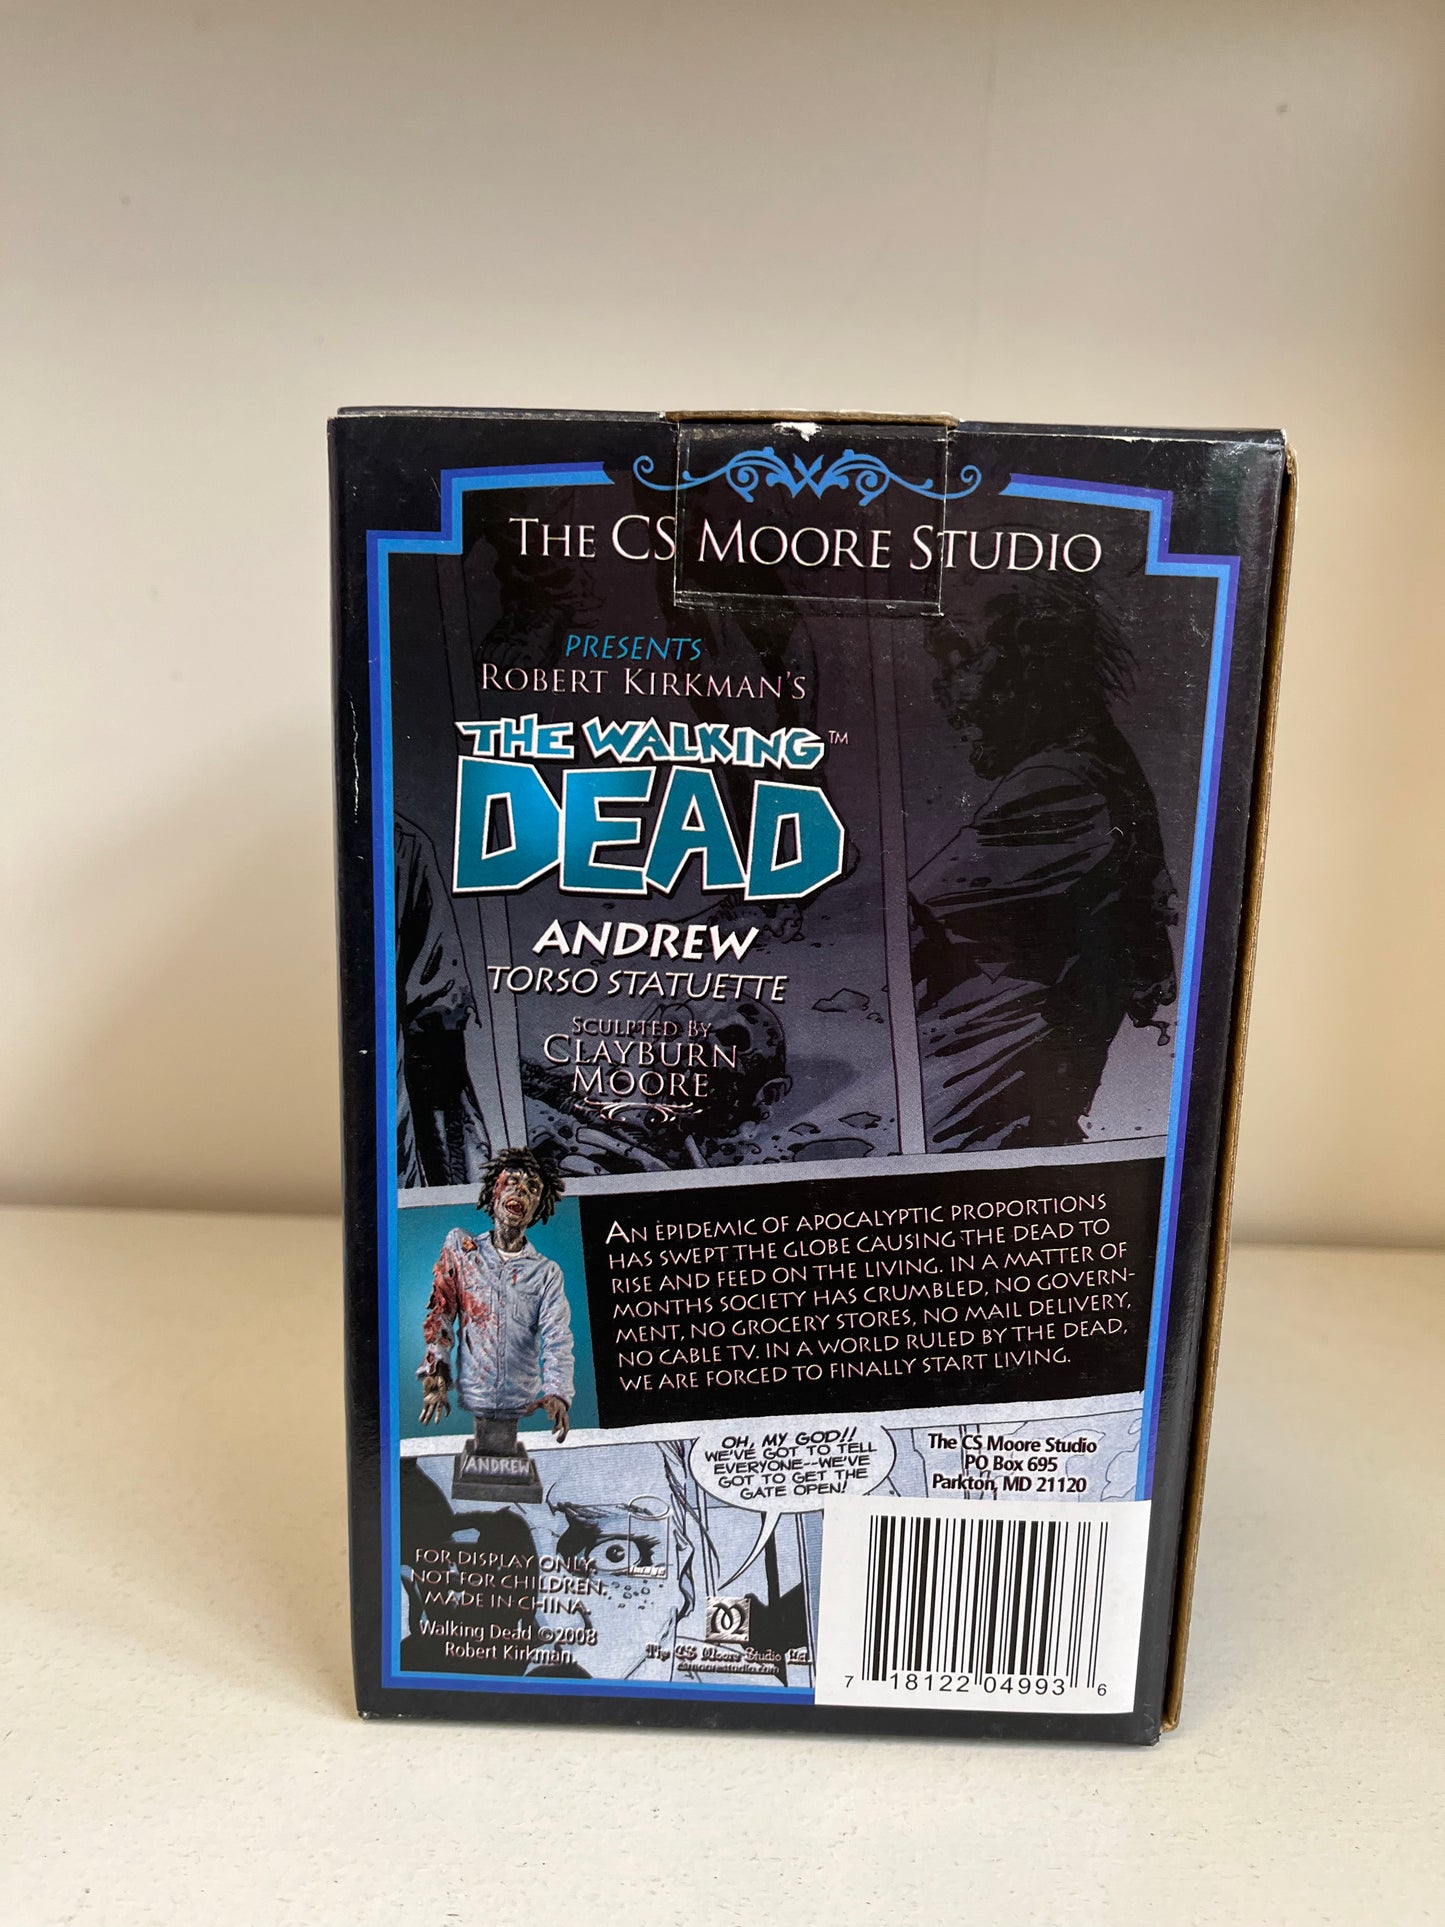 The Walking Dead Andrew statue